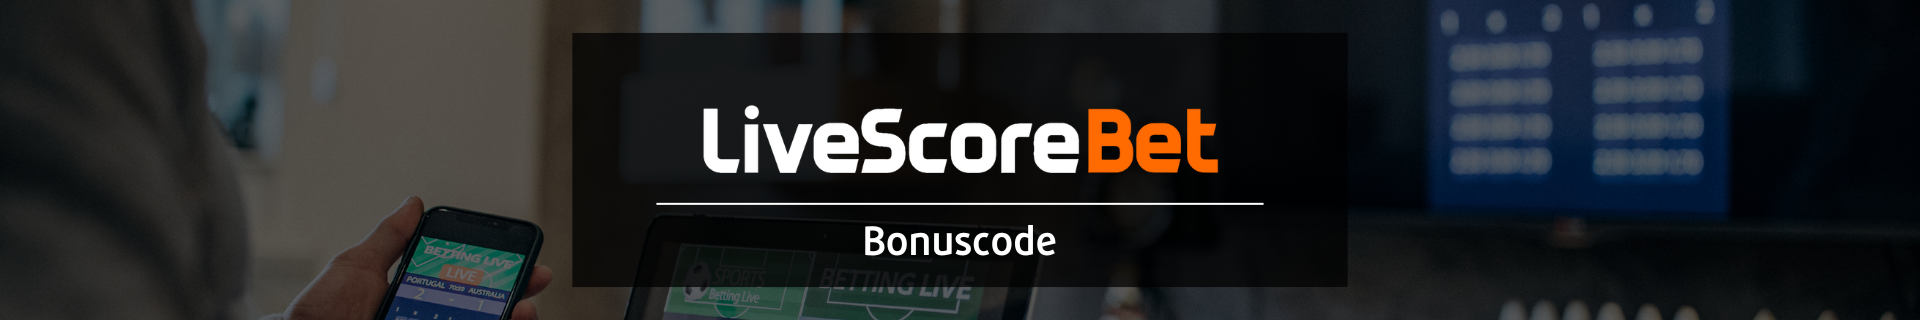 Livescore Bet bonus voetbalwedden